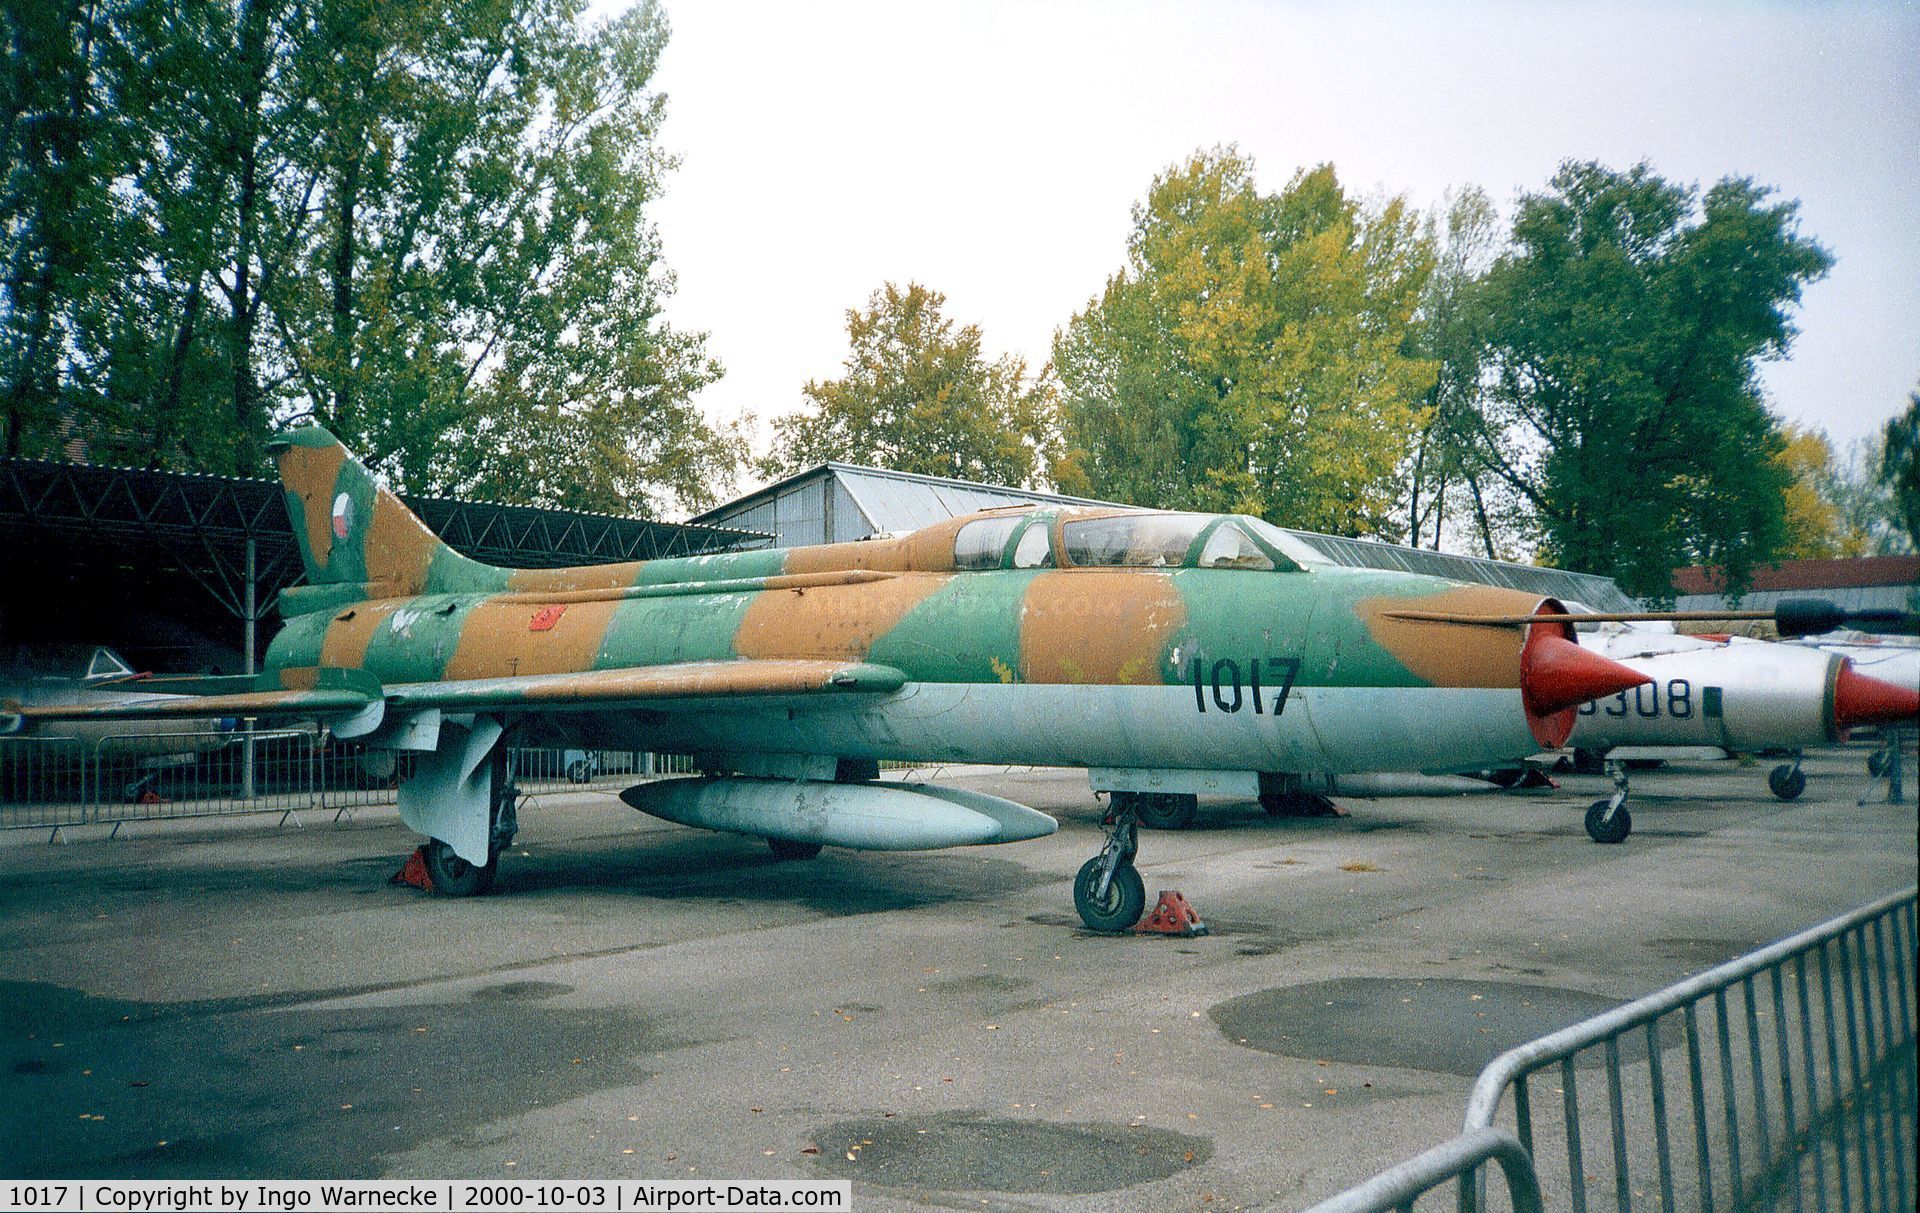 1017, Sukhoi Su-7U Moujik C/N 1017, Sukhoi Su-7U Moujik of the czechoslovak air force at the Letecke Muzeum, Prague-Kbely